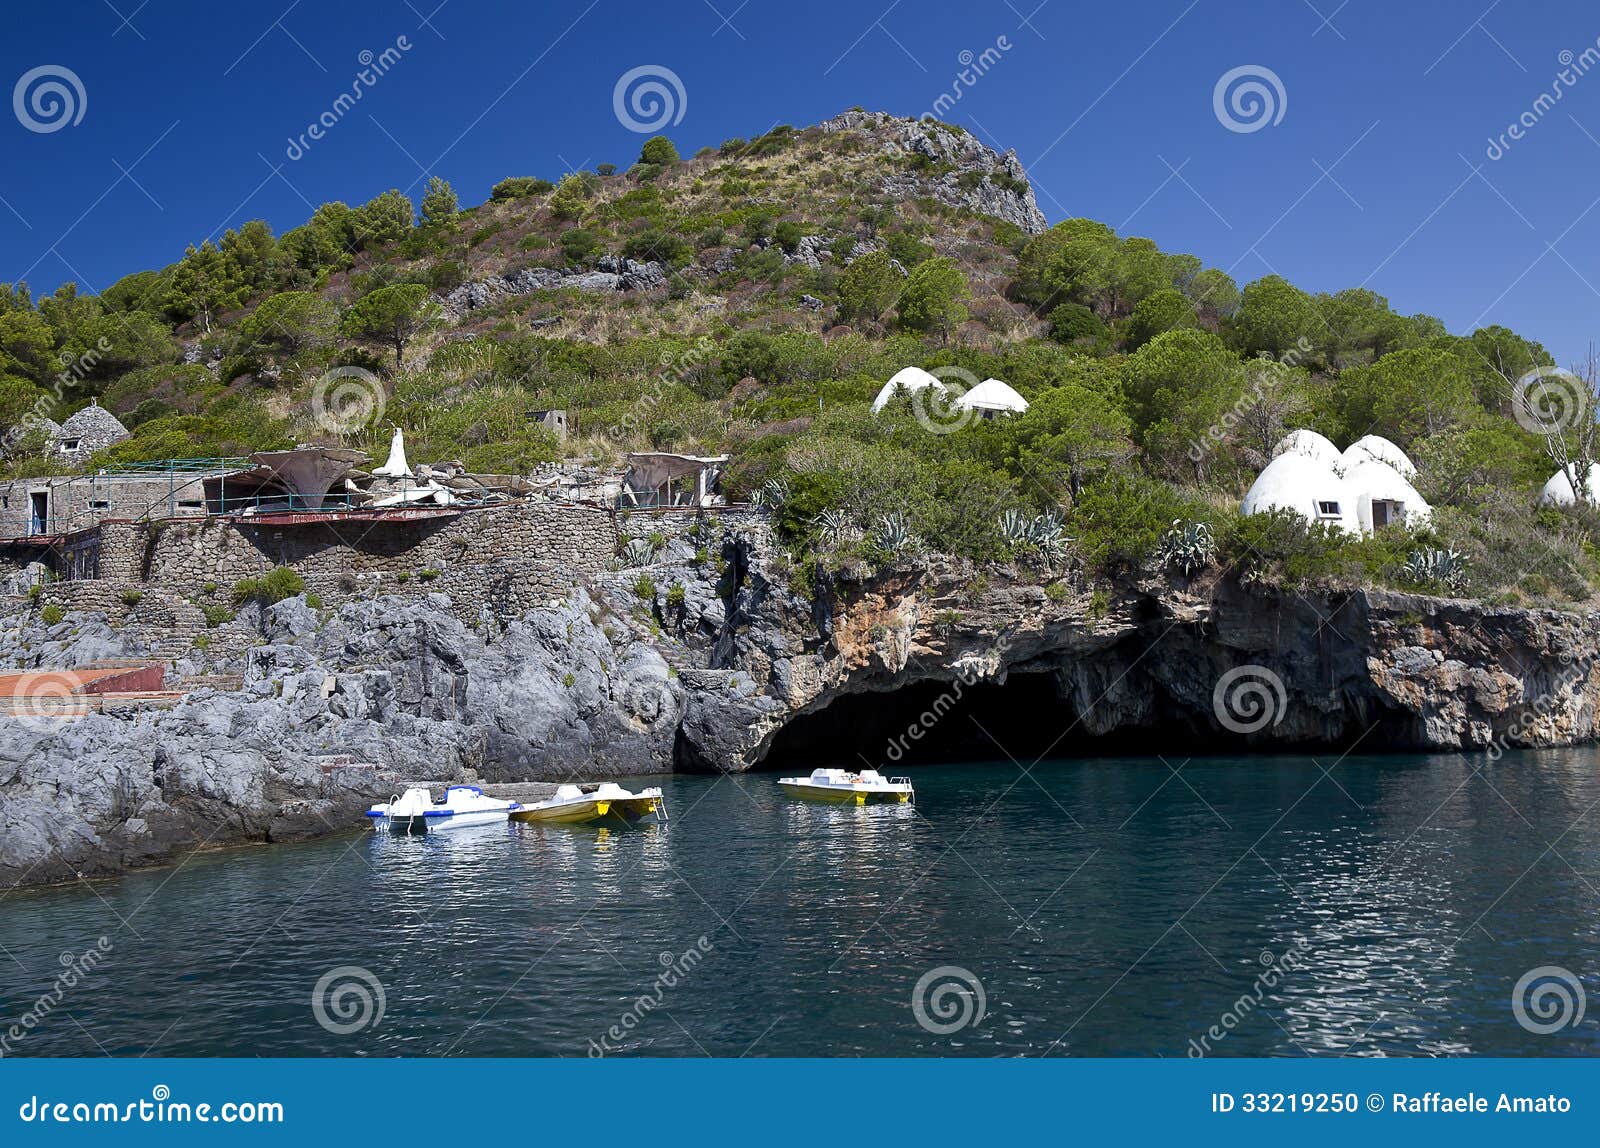 cave lion ,dino island, praia a mare, cs, italy